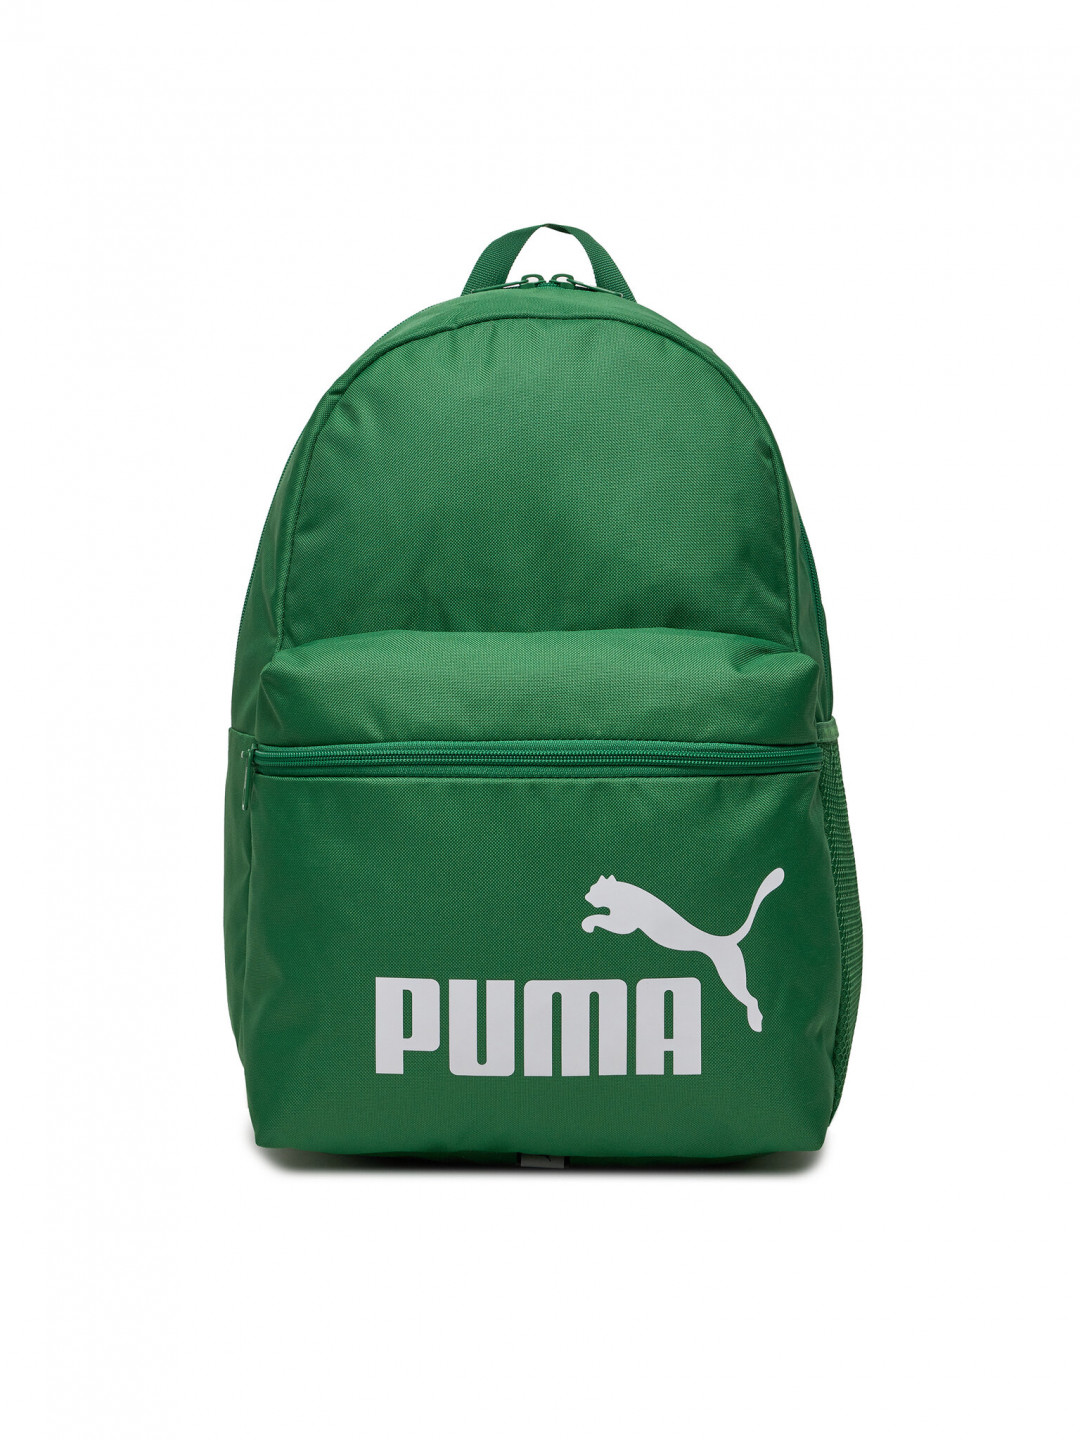 Puma Batoh Phase Backpack 079943 12 Zelená